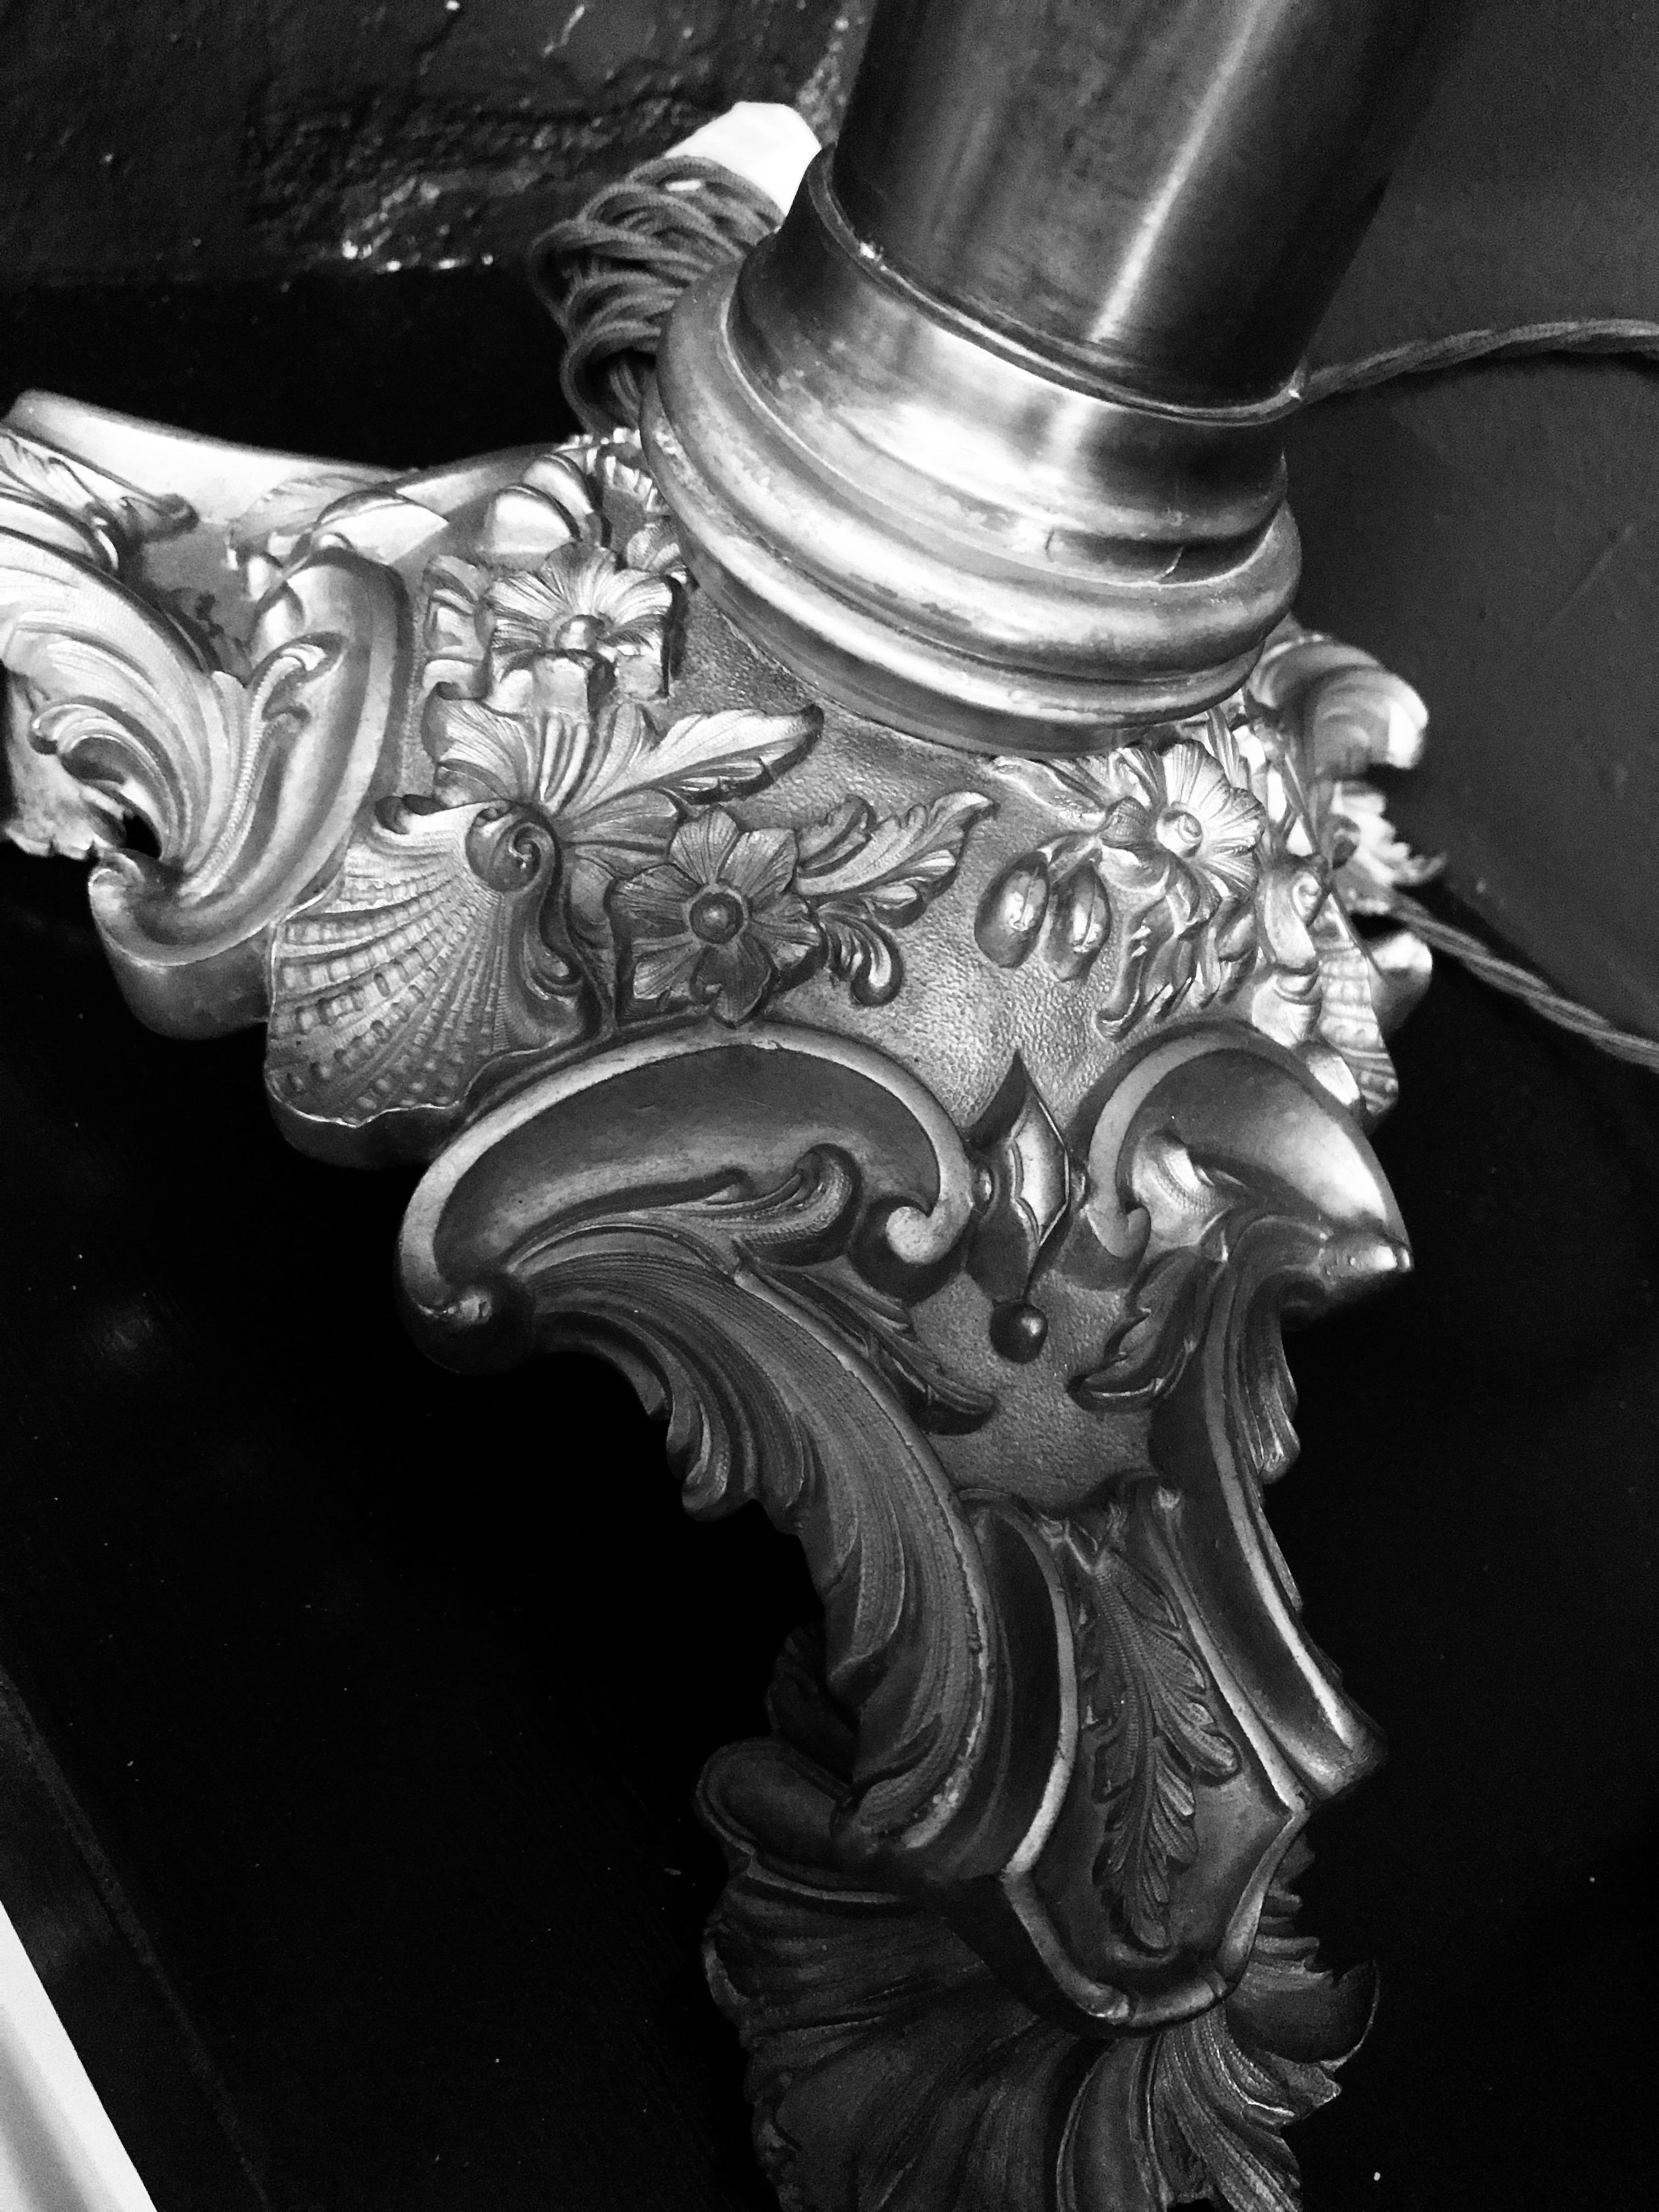 English Classical Bronze Lamp 1